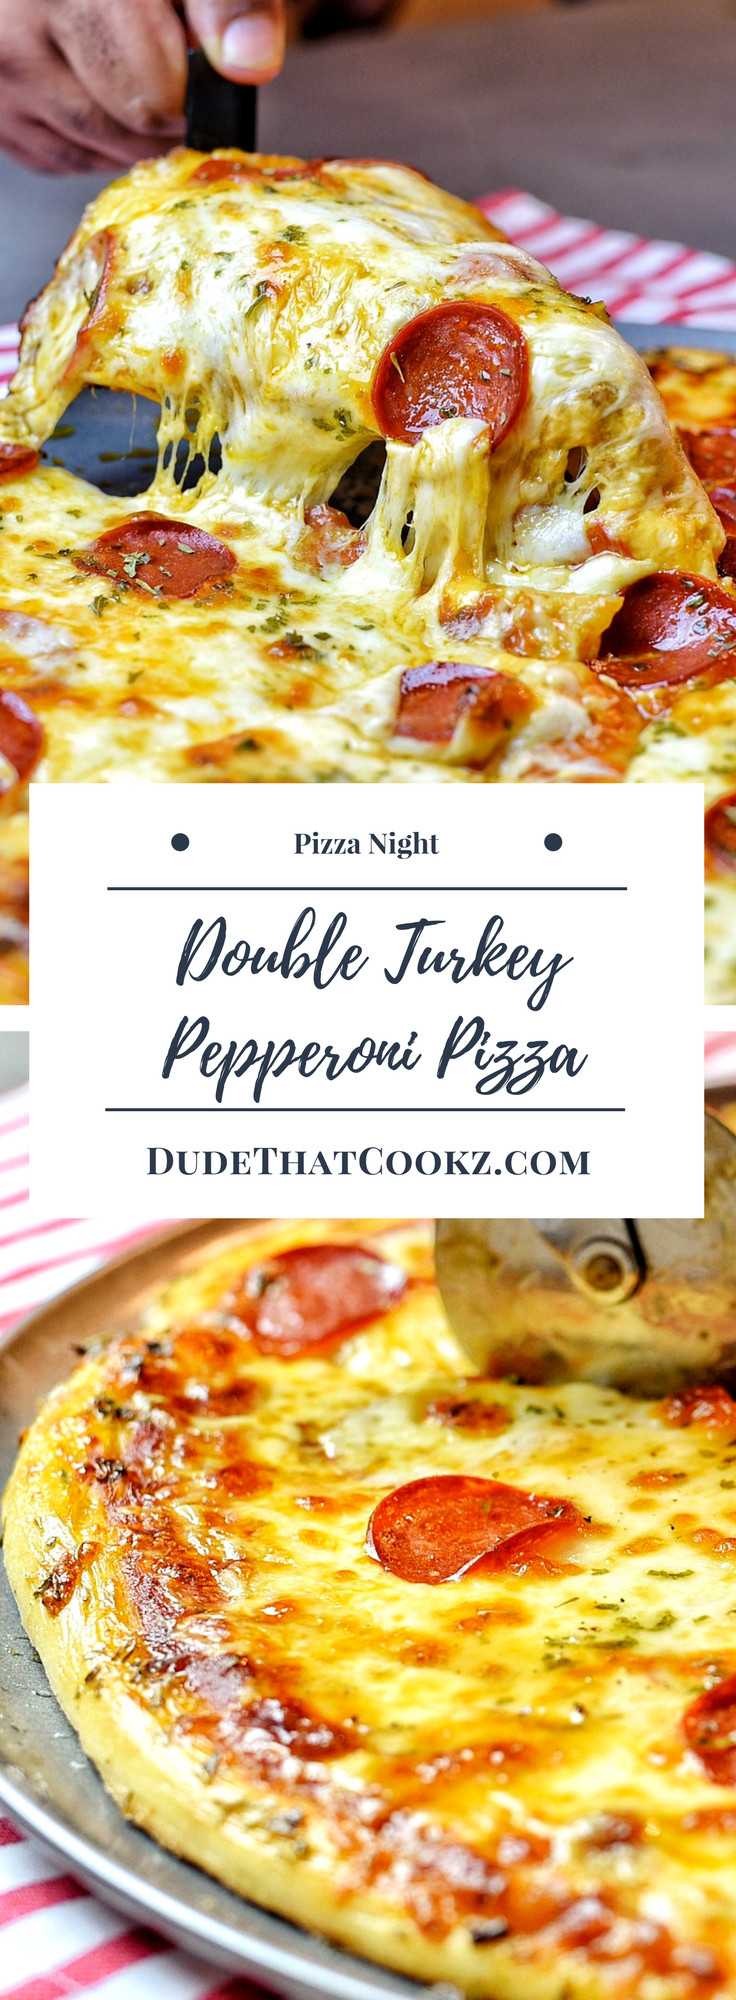 Tofurkey Pepperoni Pizza
 Double Turkey Pepperoni Pizza